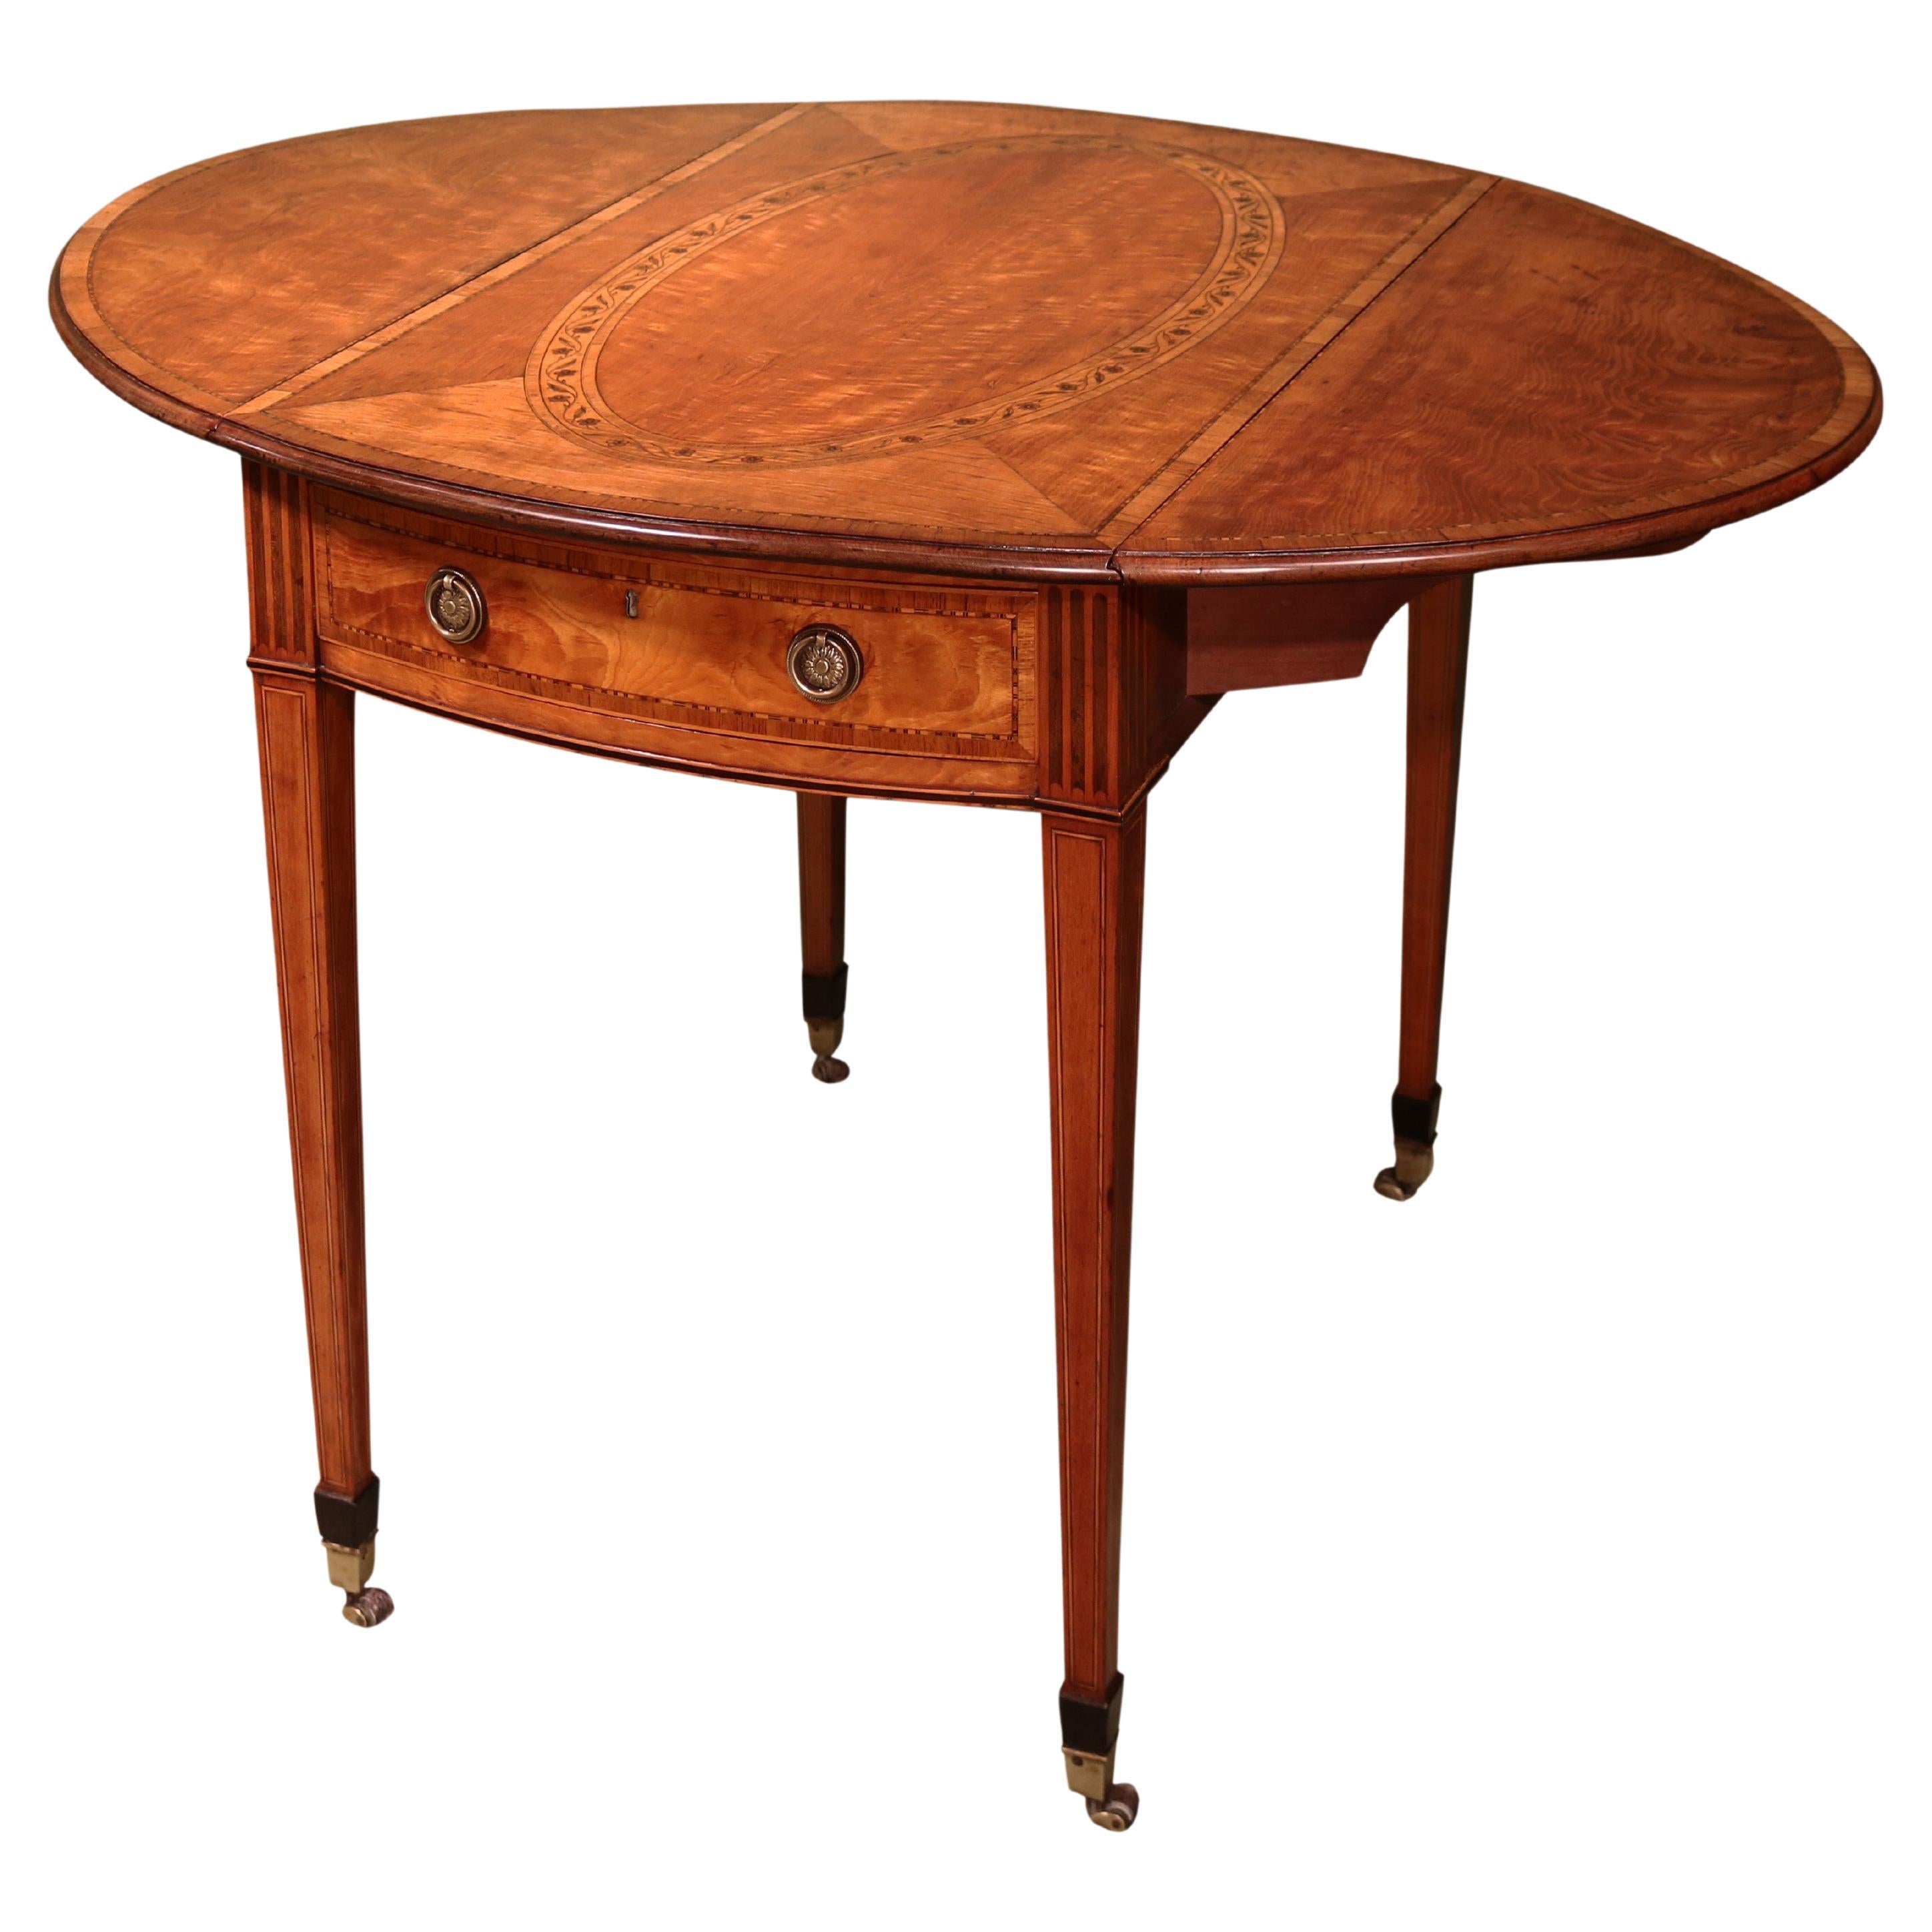 Antique George III period satinwood oval Pembroke Table